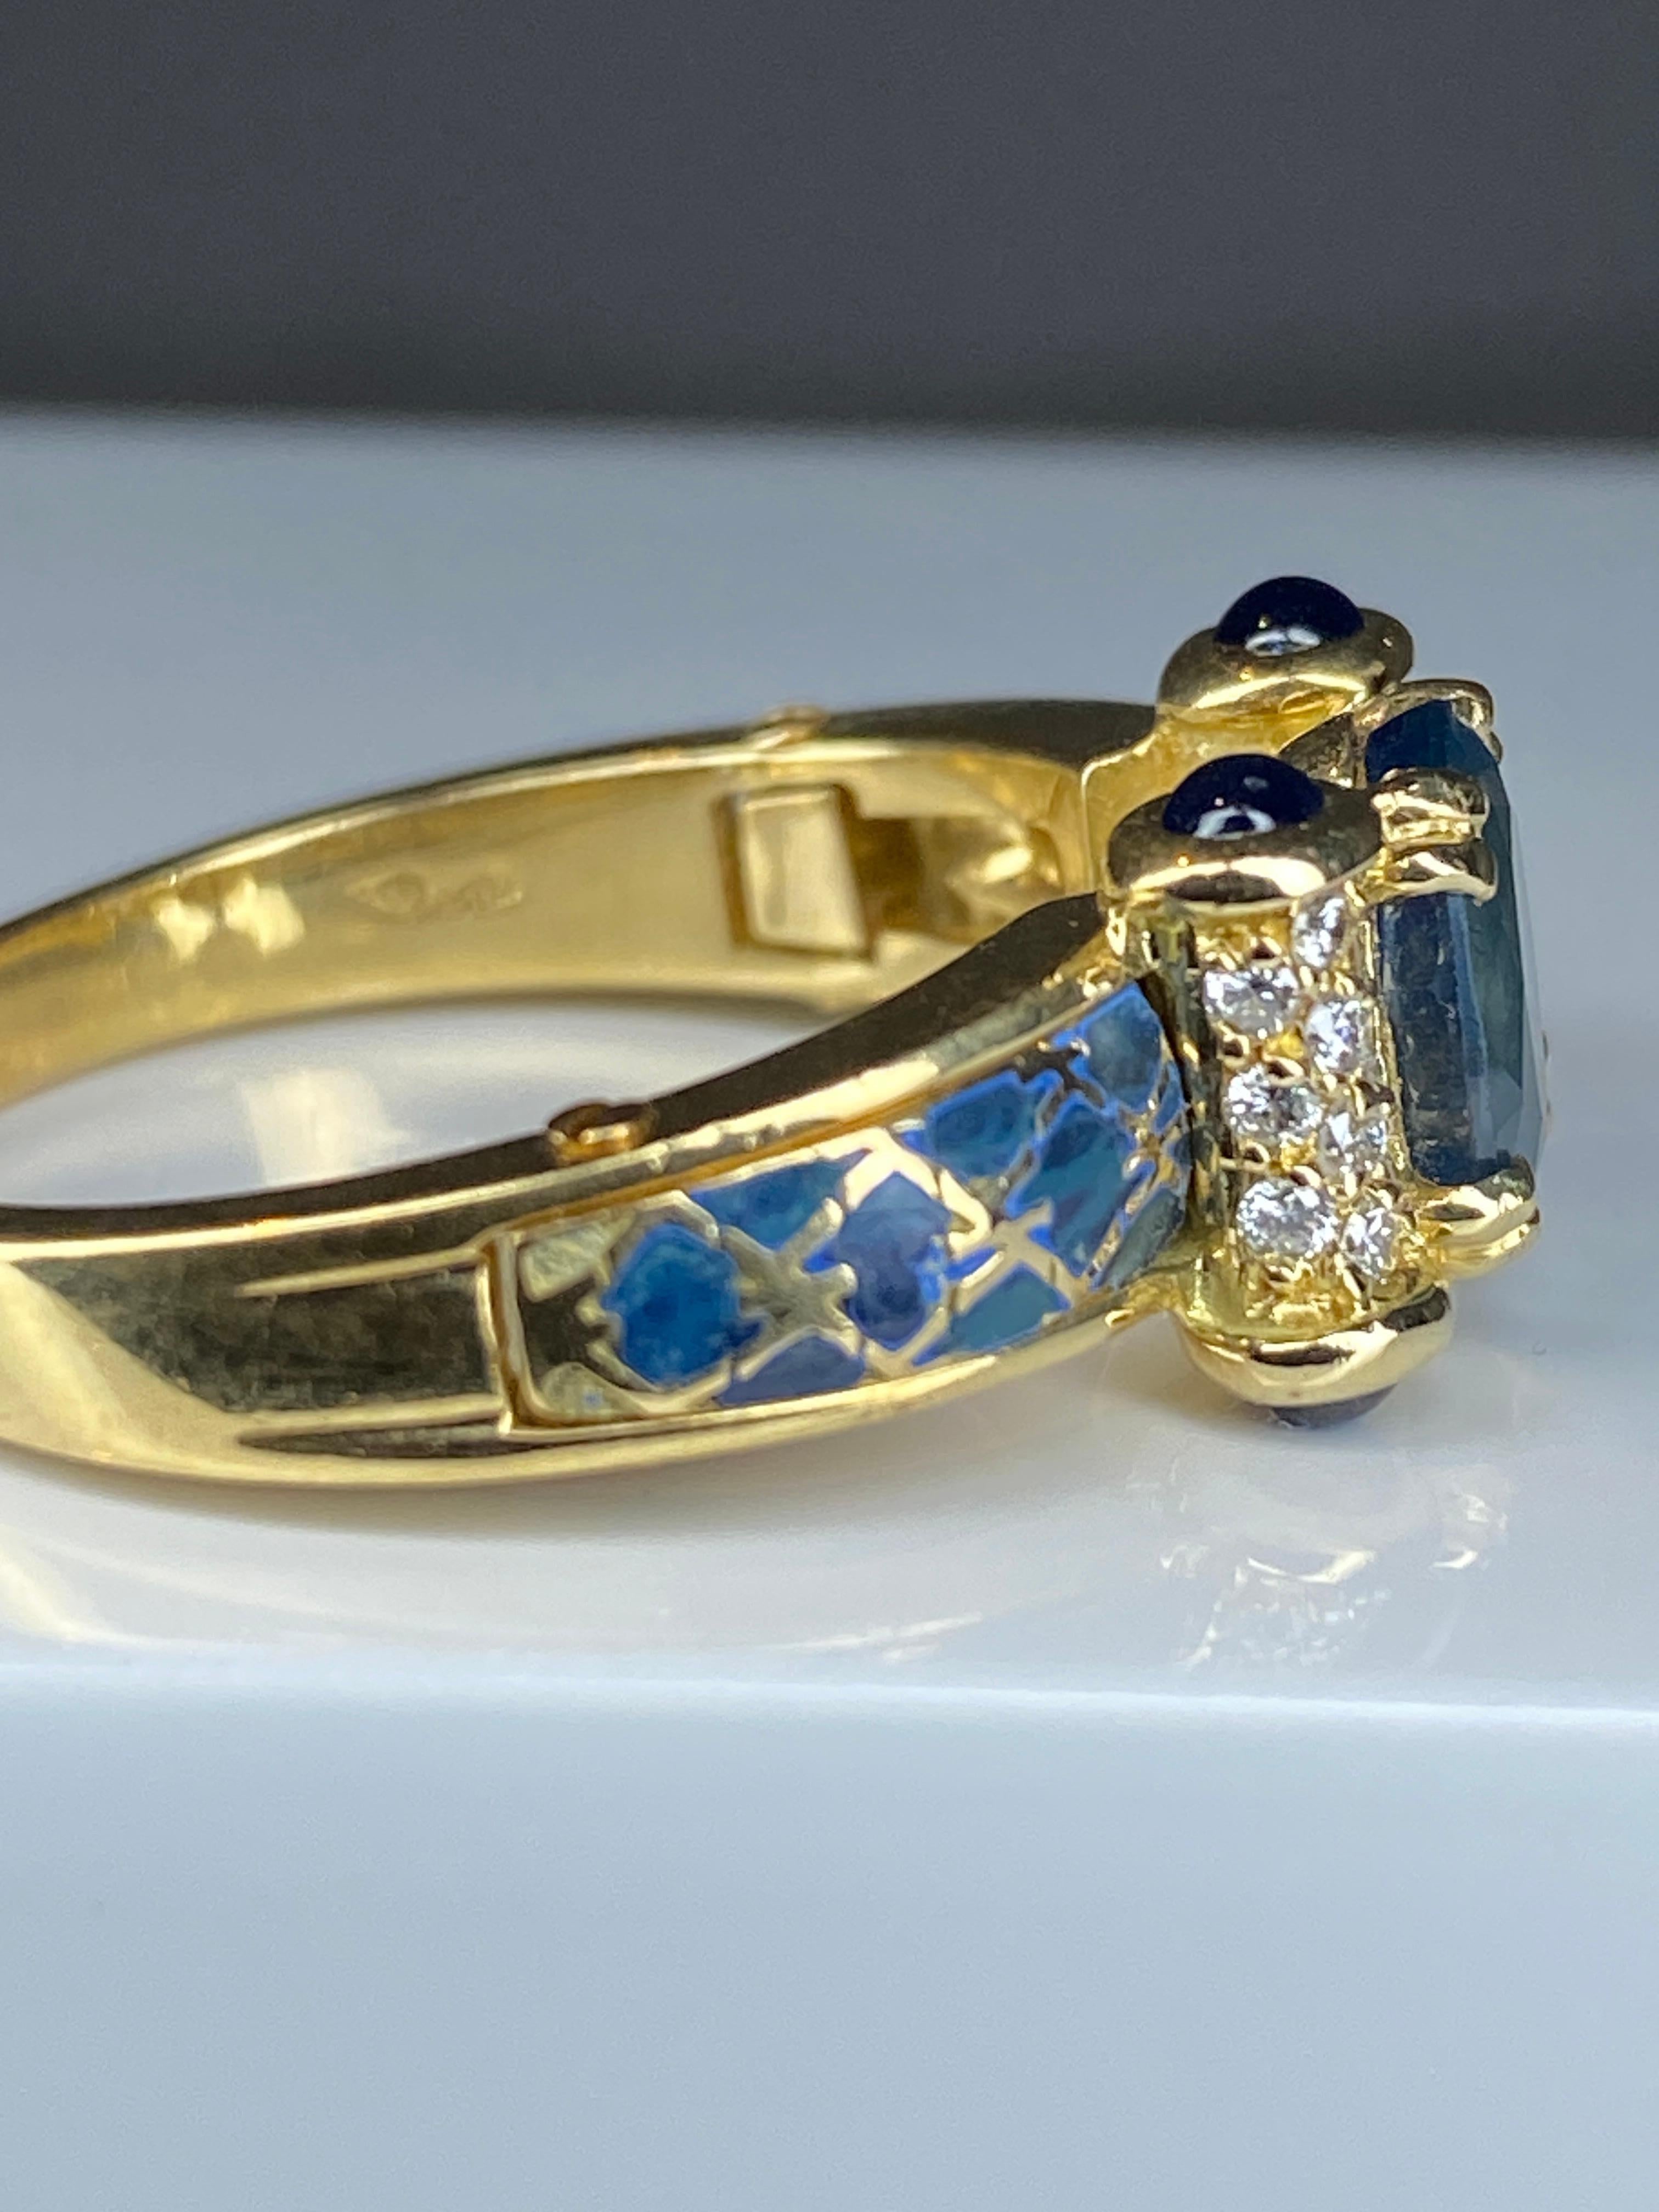 Korloff Ring in 18 Carat Gold: Sapphires, Diamonds, Blue Enamel For Sale 9